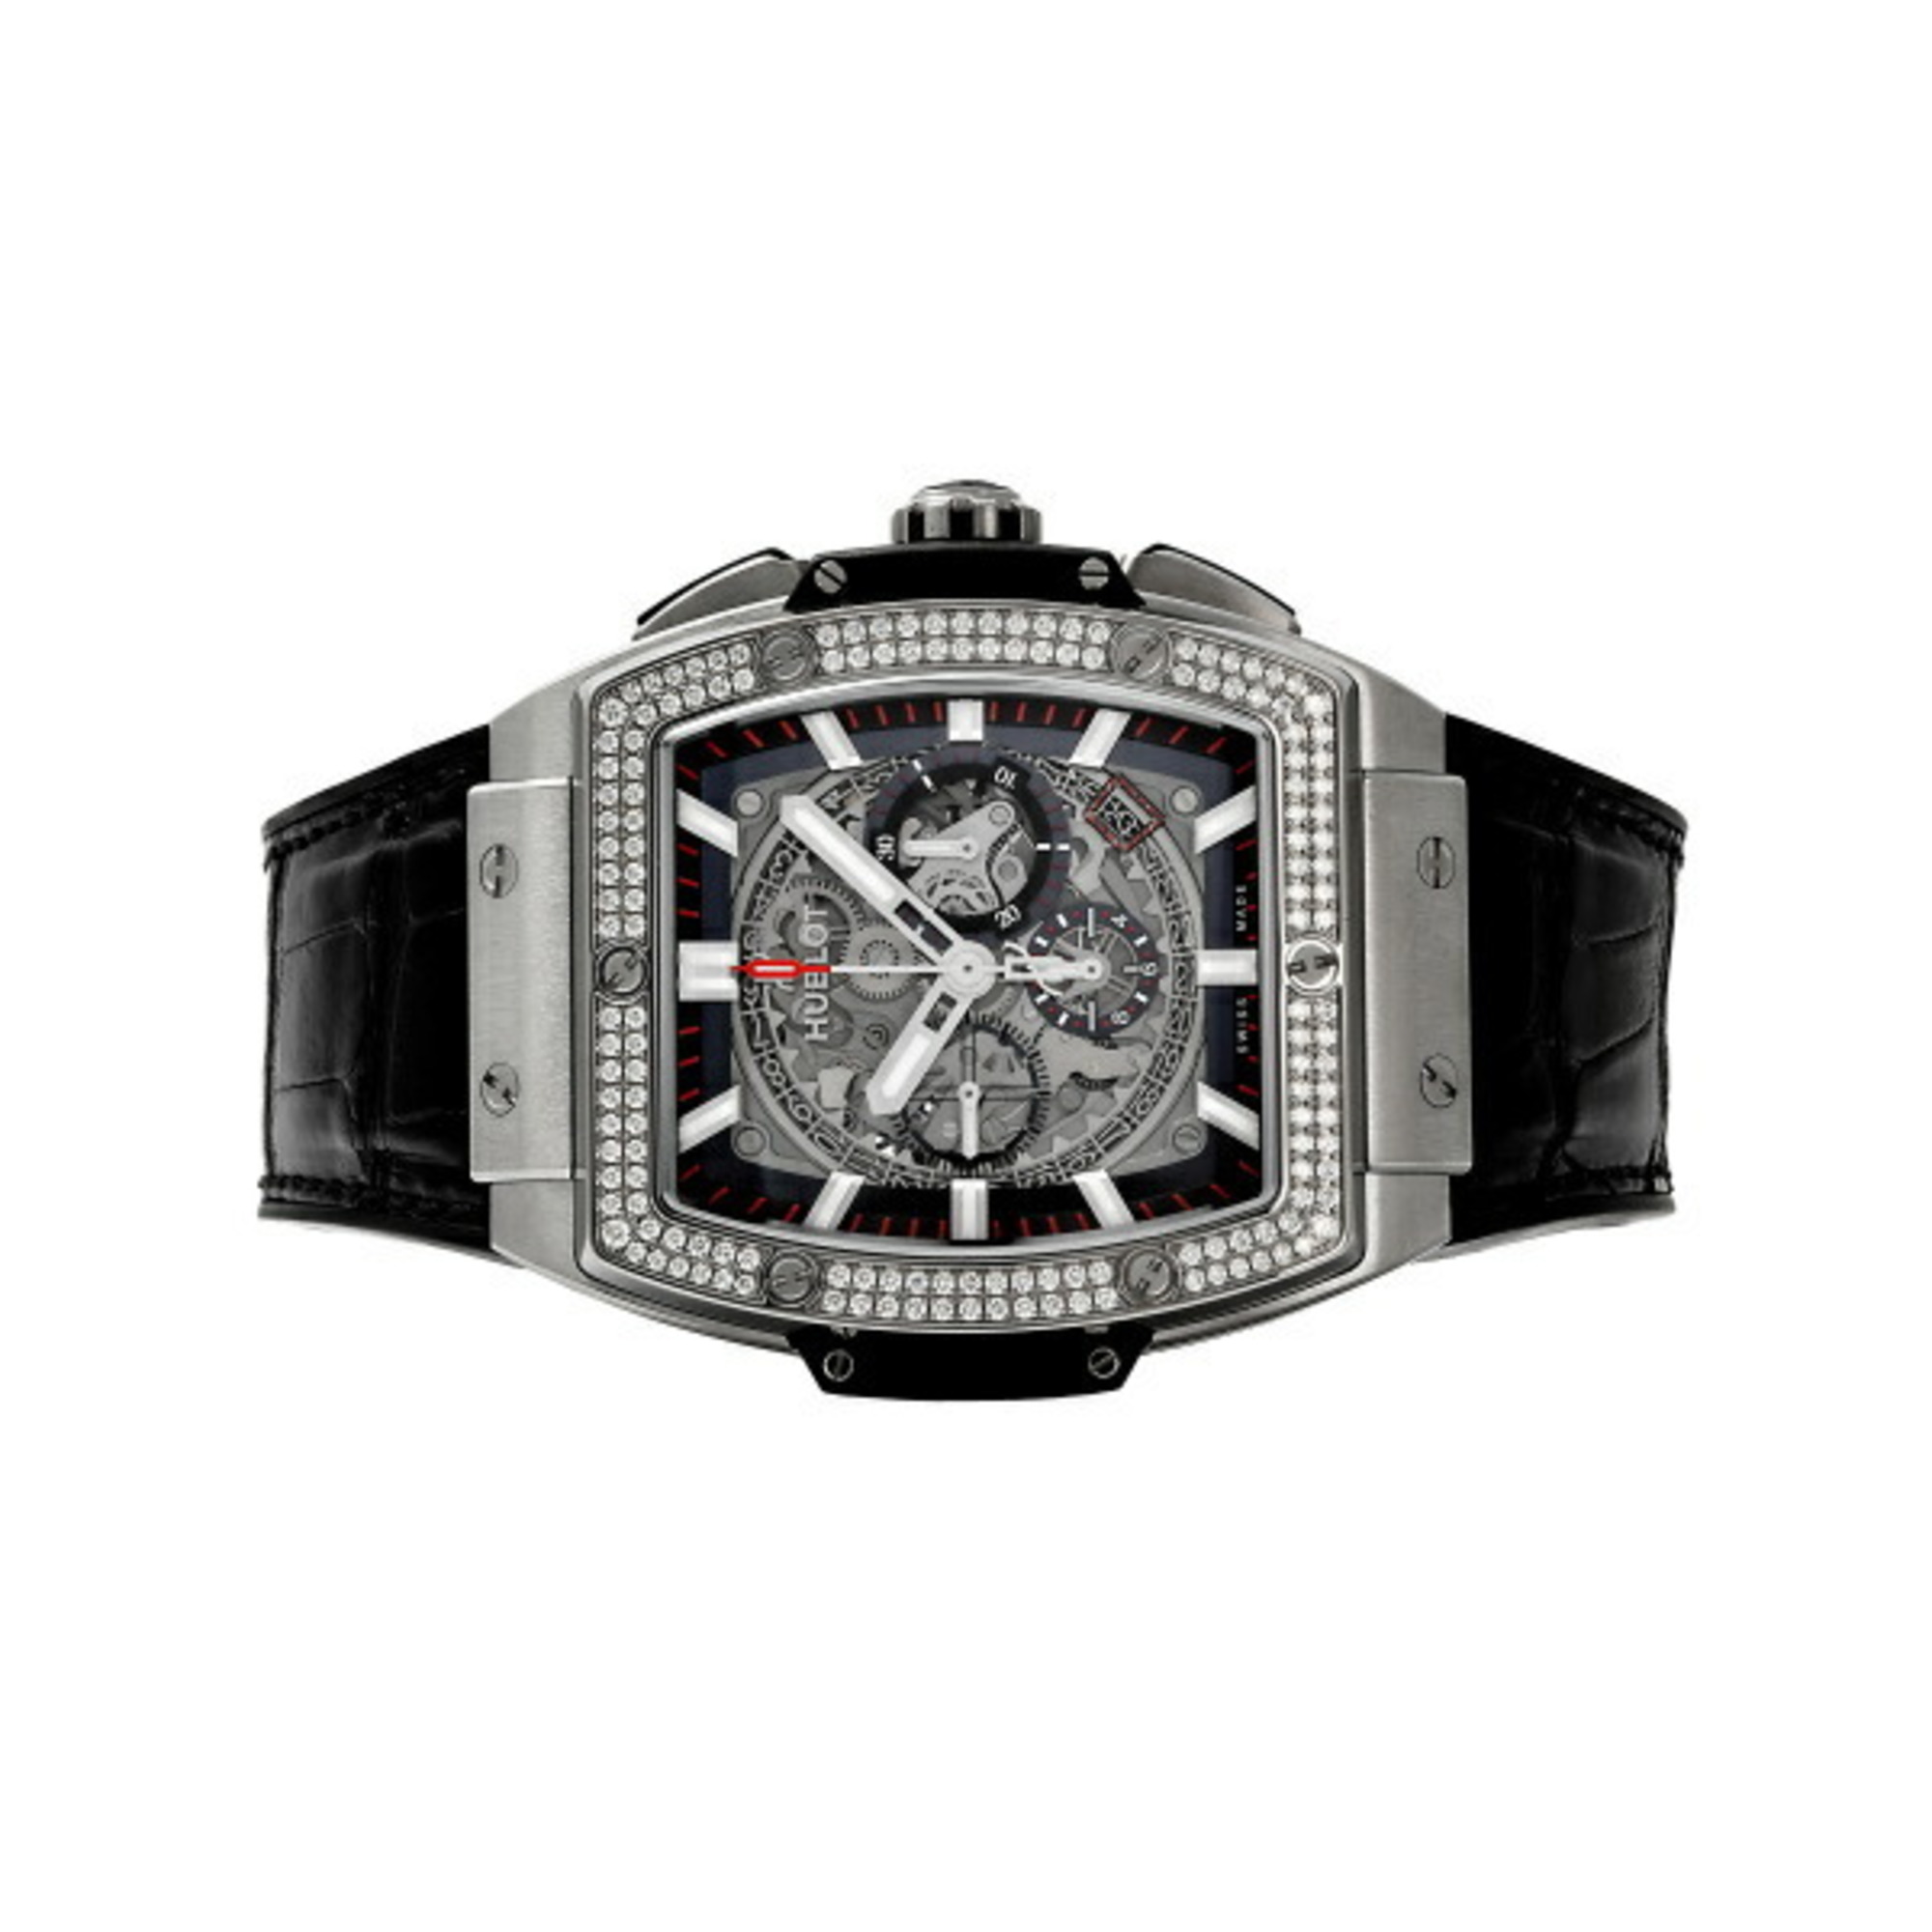 HUBLOT Spirit of Big Bang Titanium Diamond 601.NX.0173.LR.1104 Gray Dial Watch Men's